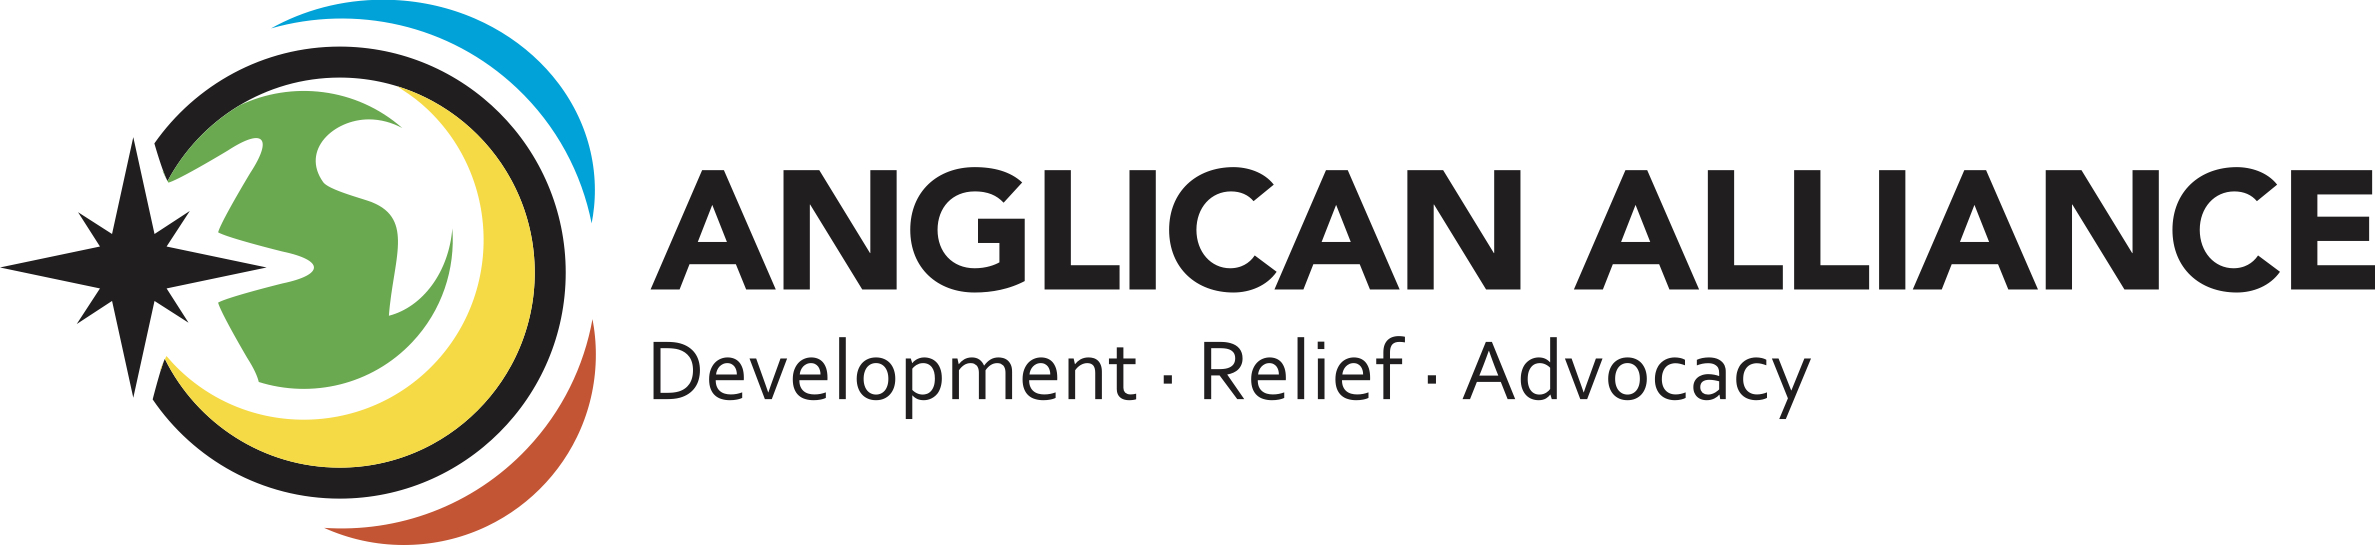 Anglican Alliance - Development, Relief, Advocacy